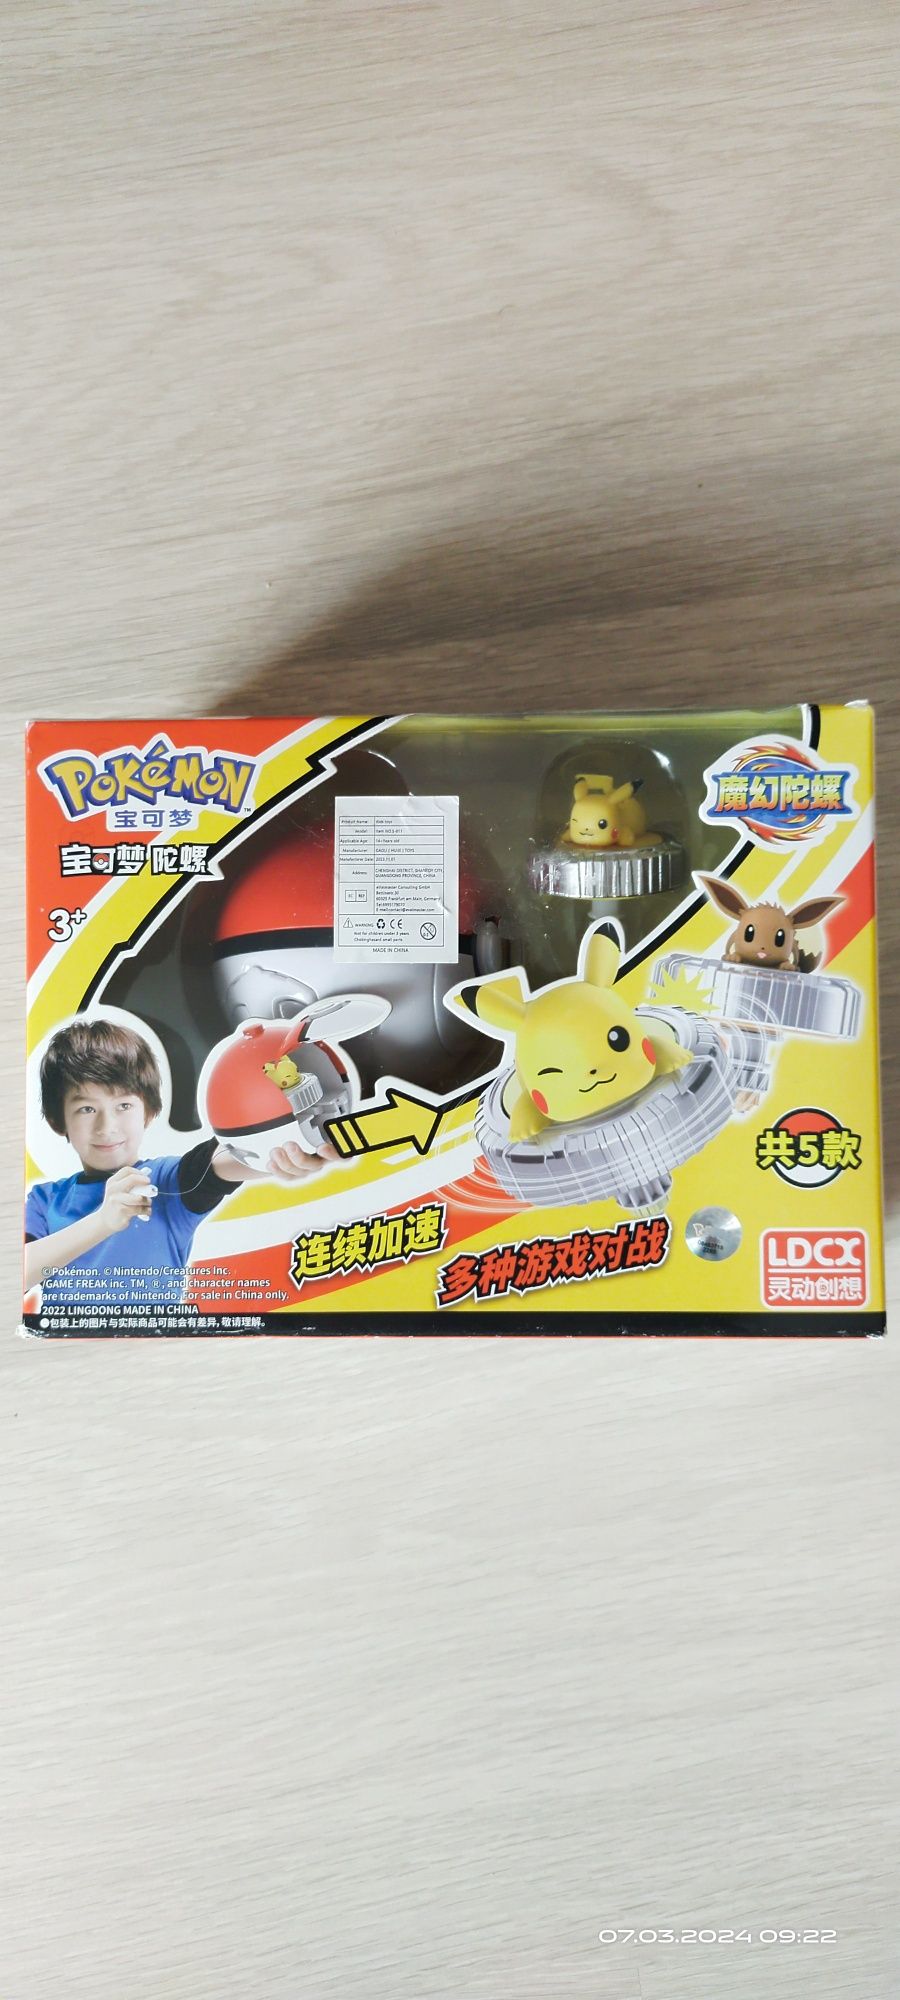 Pokemon Pikachu spinner i pokeball